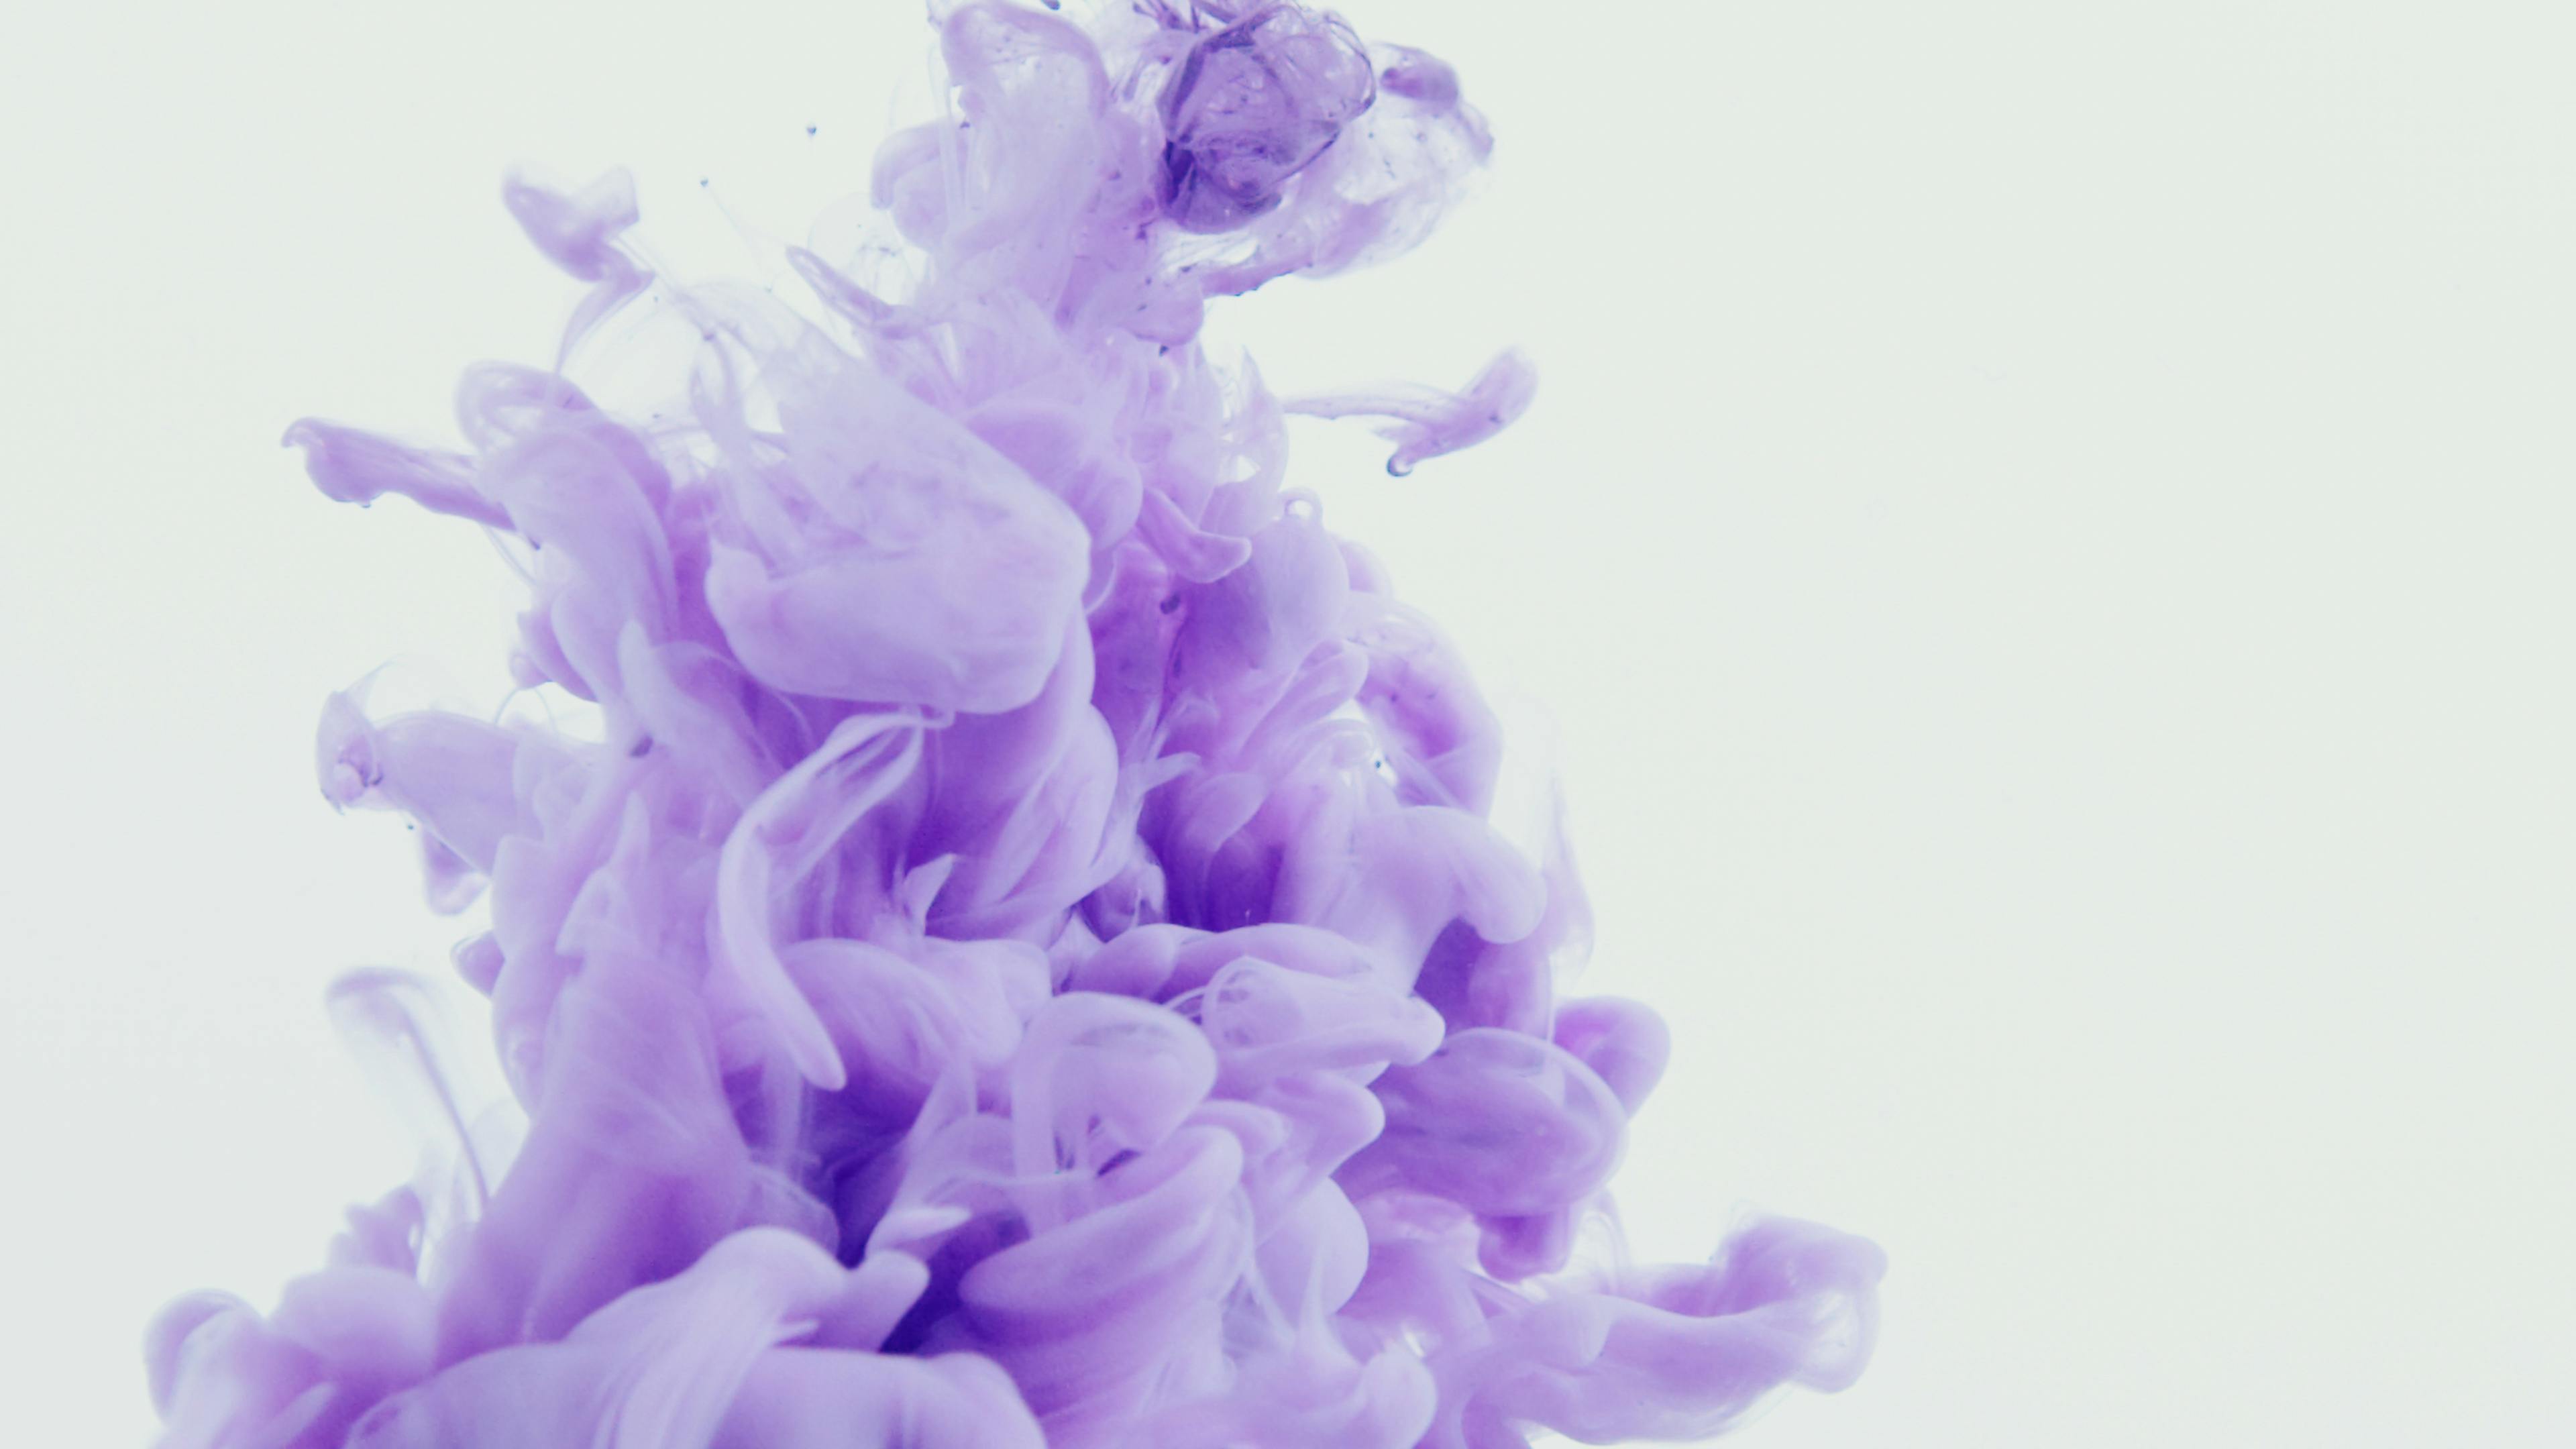 Purple Opaque Smoke on White Background · Free Stock Photo